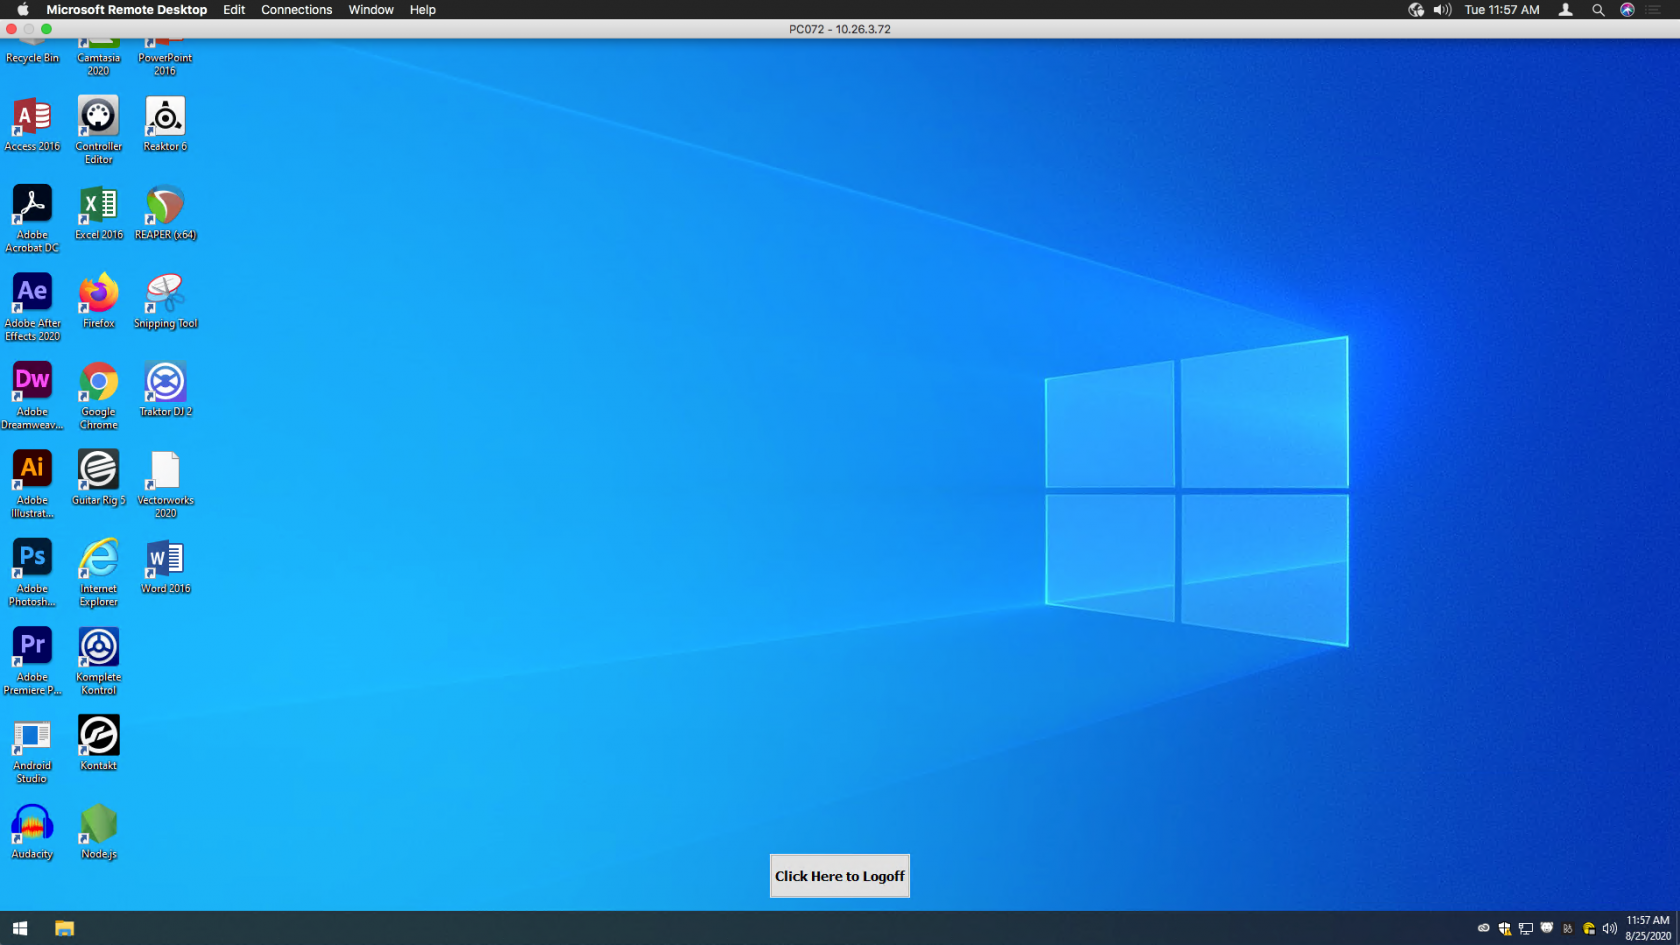 Desktop runtime 7.0